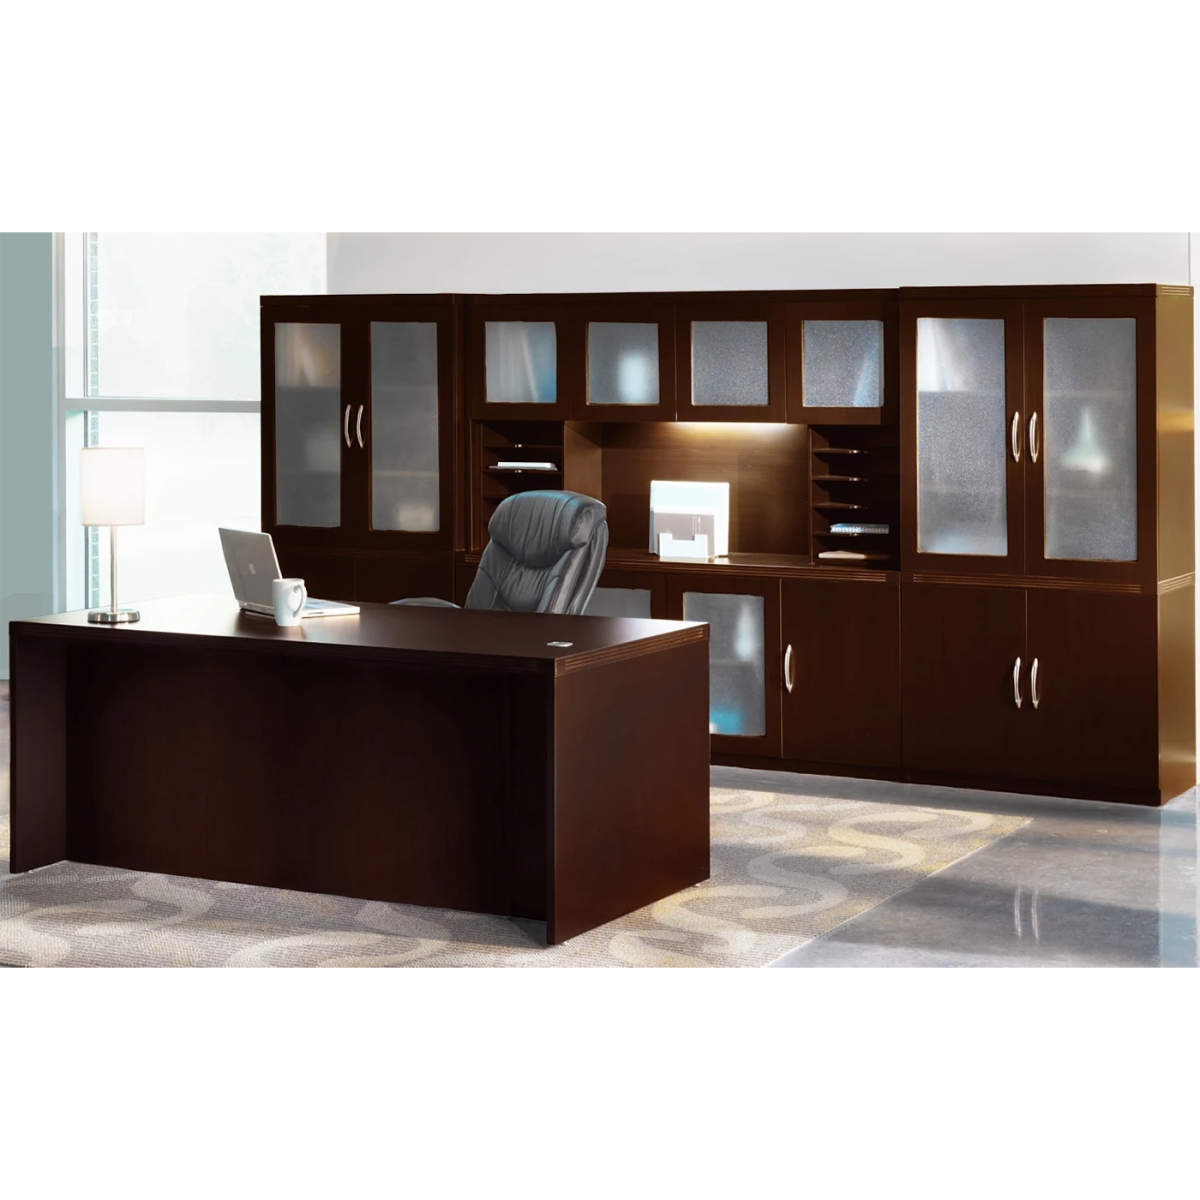 At35ldc 12 X 8 Ft. Aberdeen Series Suite 35 Executive Desk, Mocha